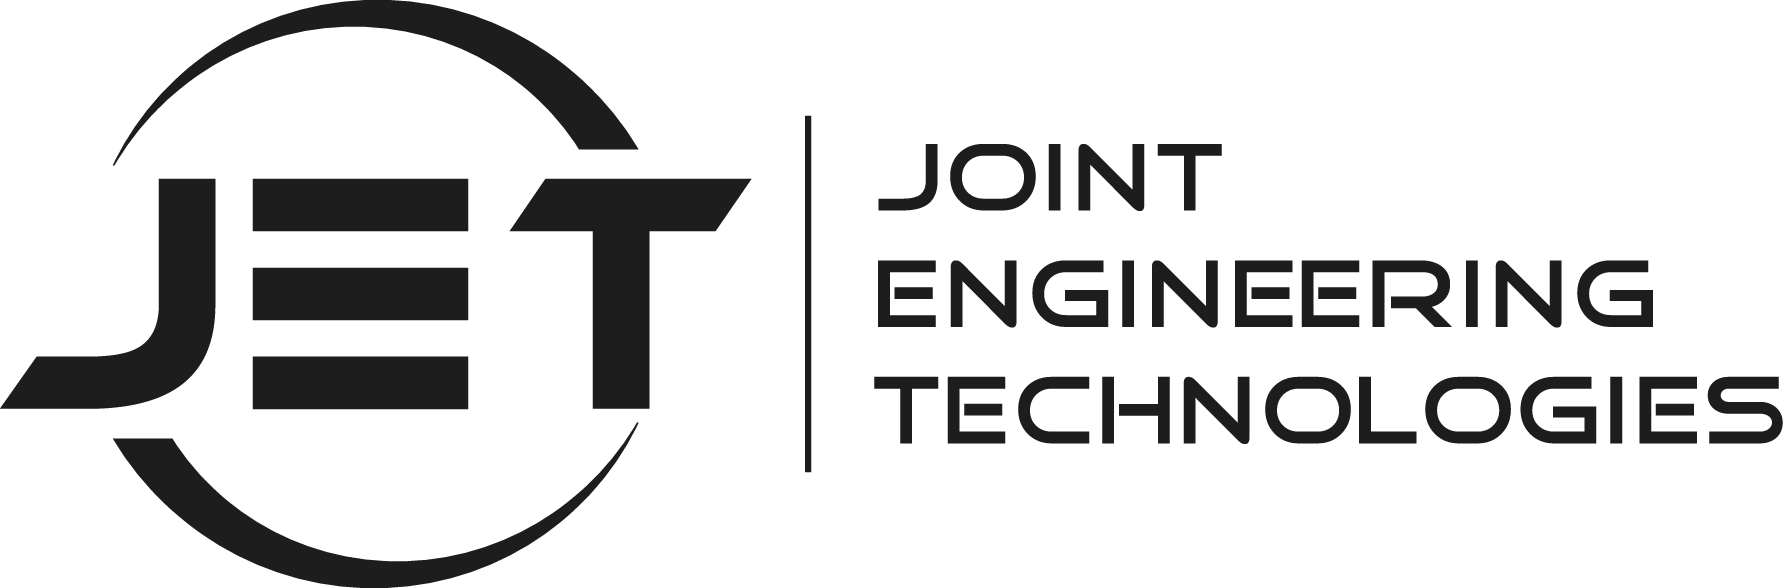 Joint Engineering Technologies